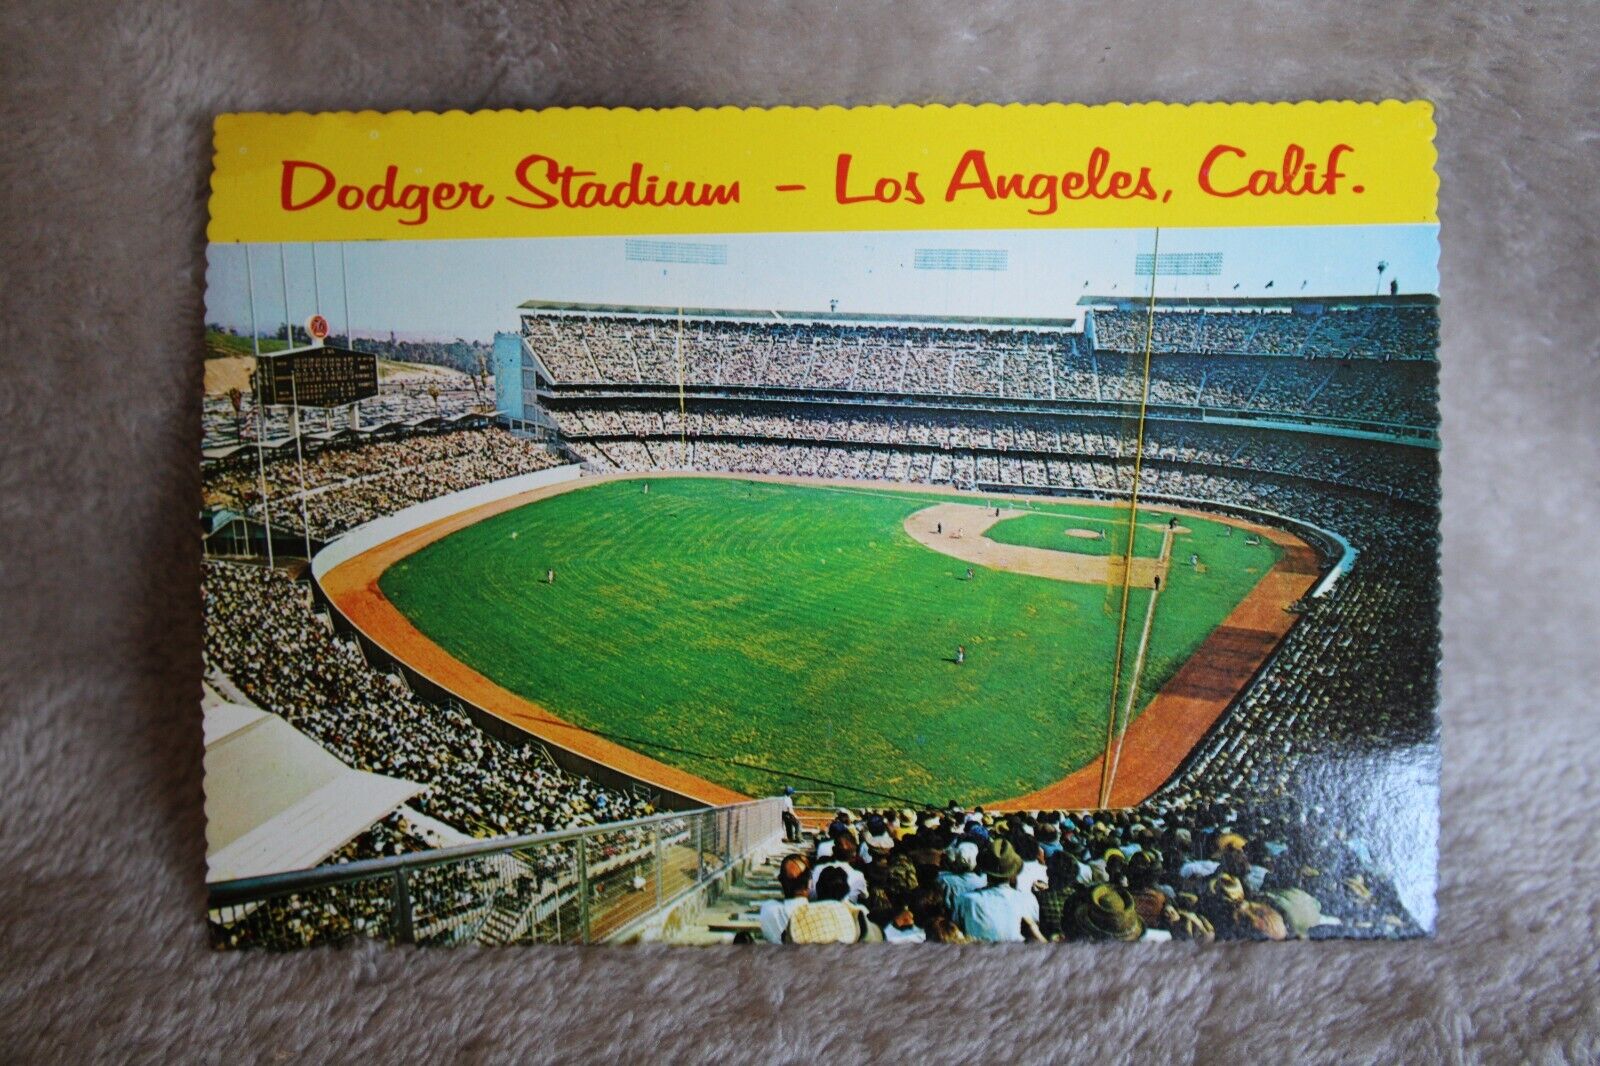 Vintage Postcard Dodger Stadium Opening Day 1962 Los Angeles, Calif. unused